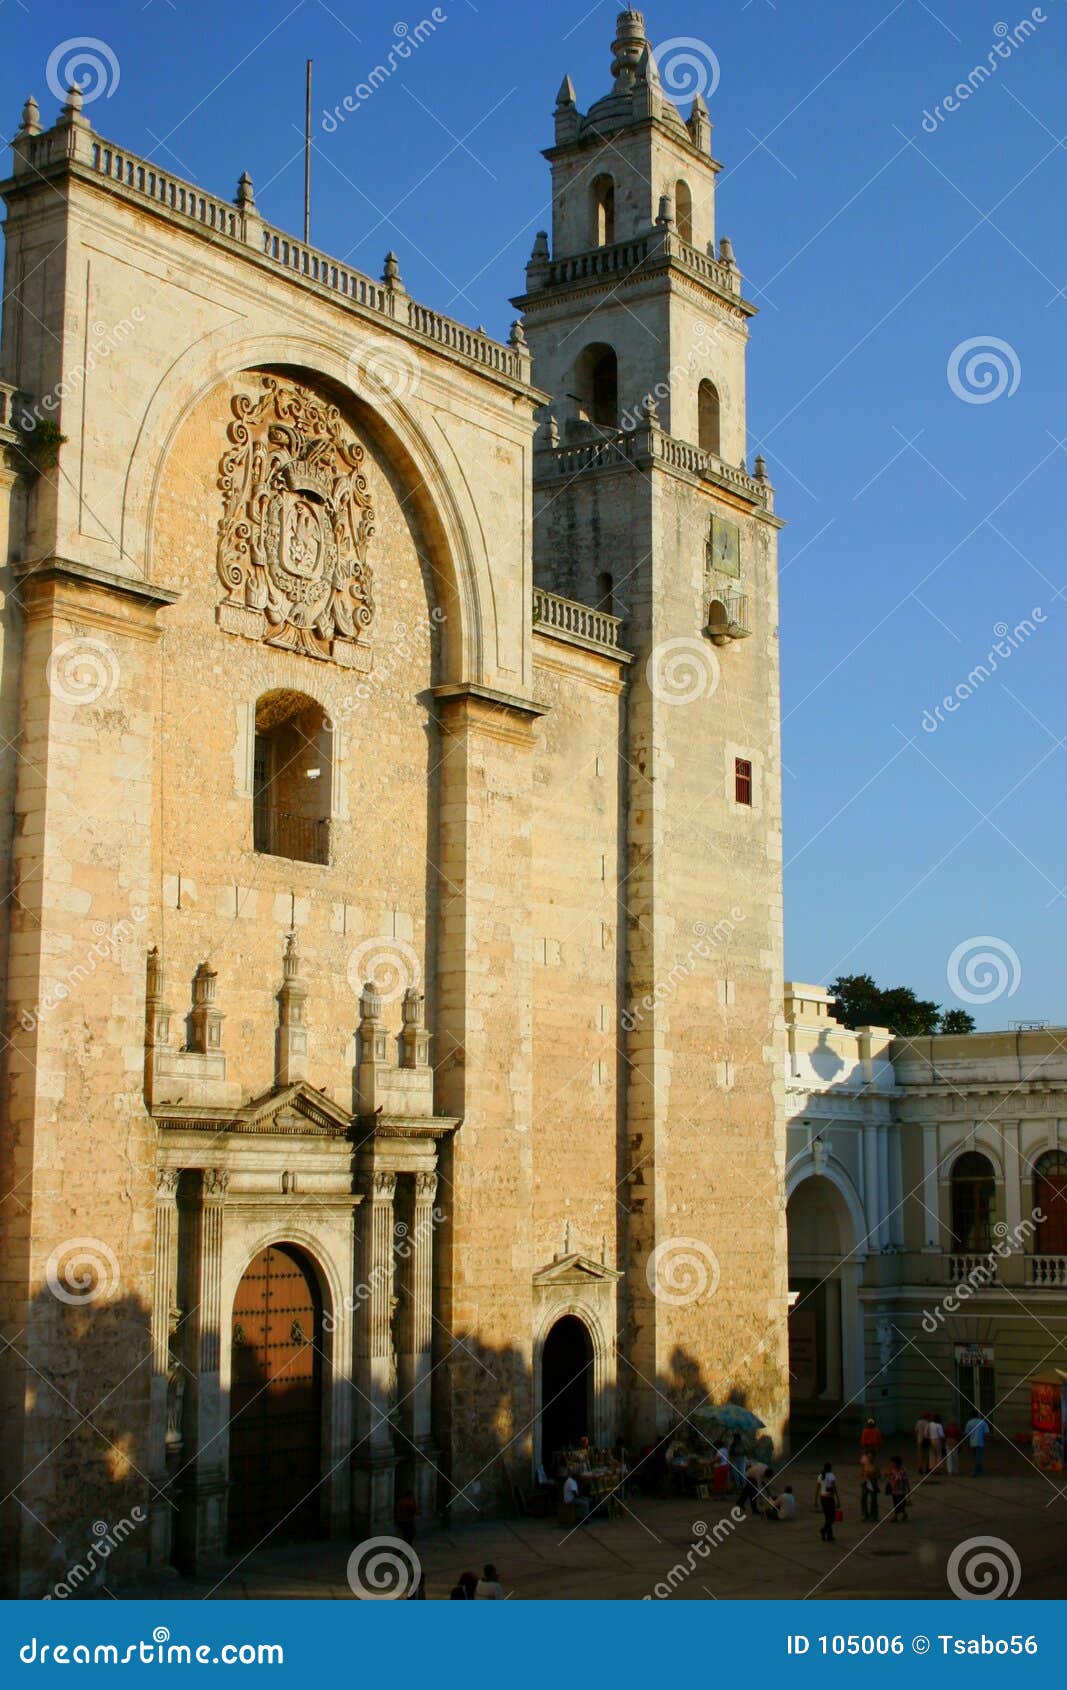 merida cathedral